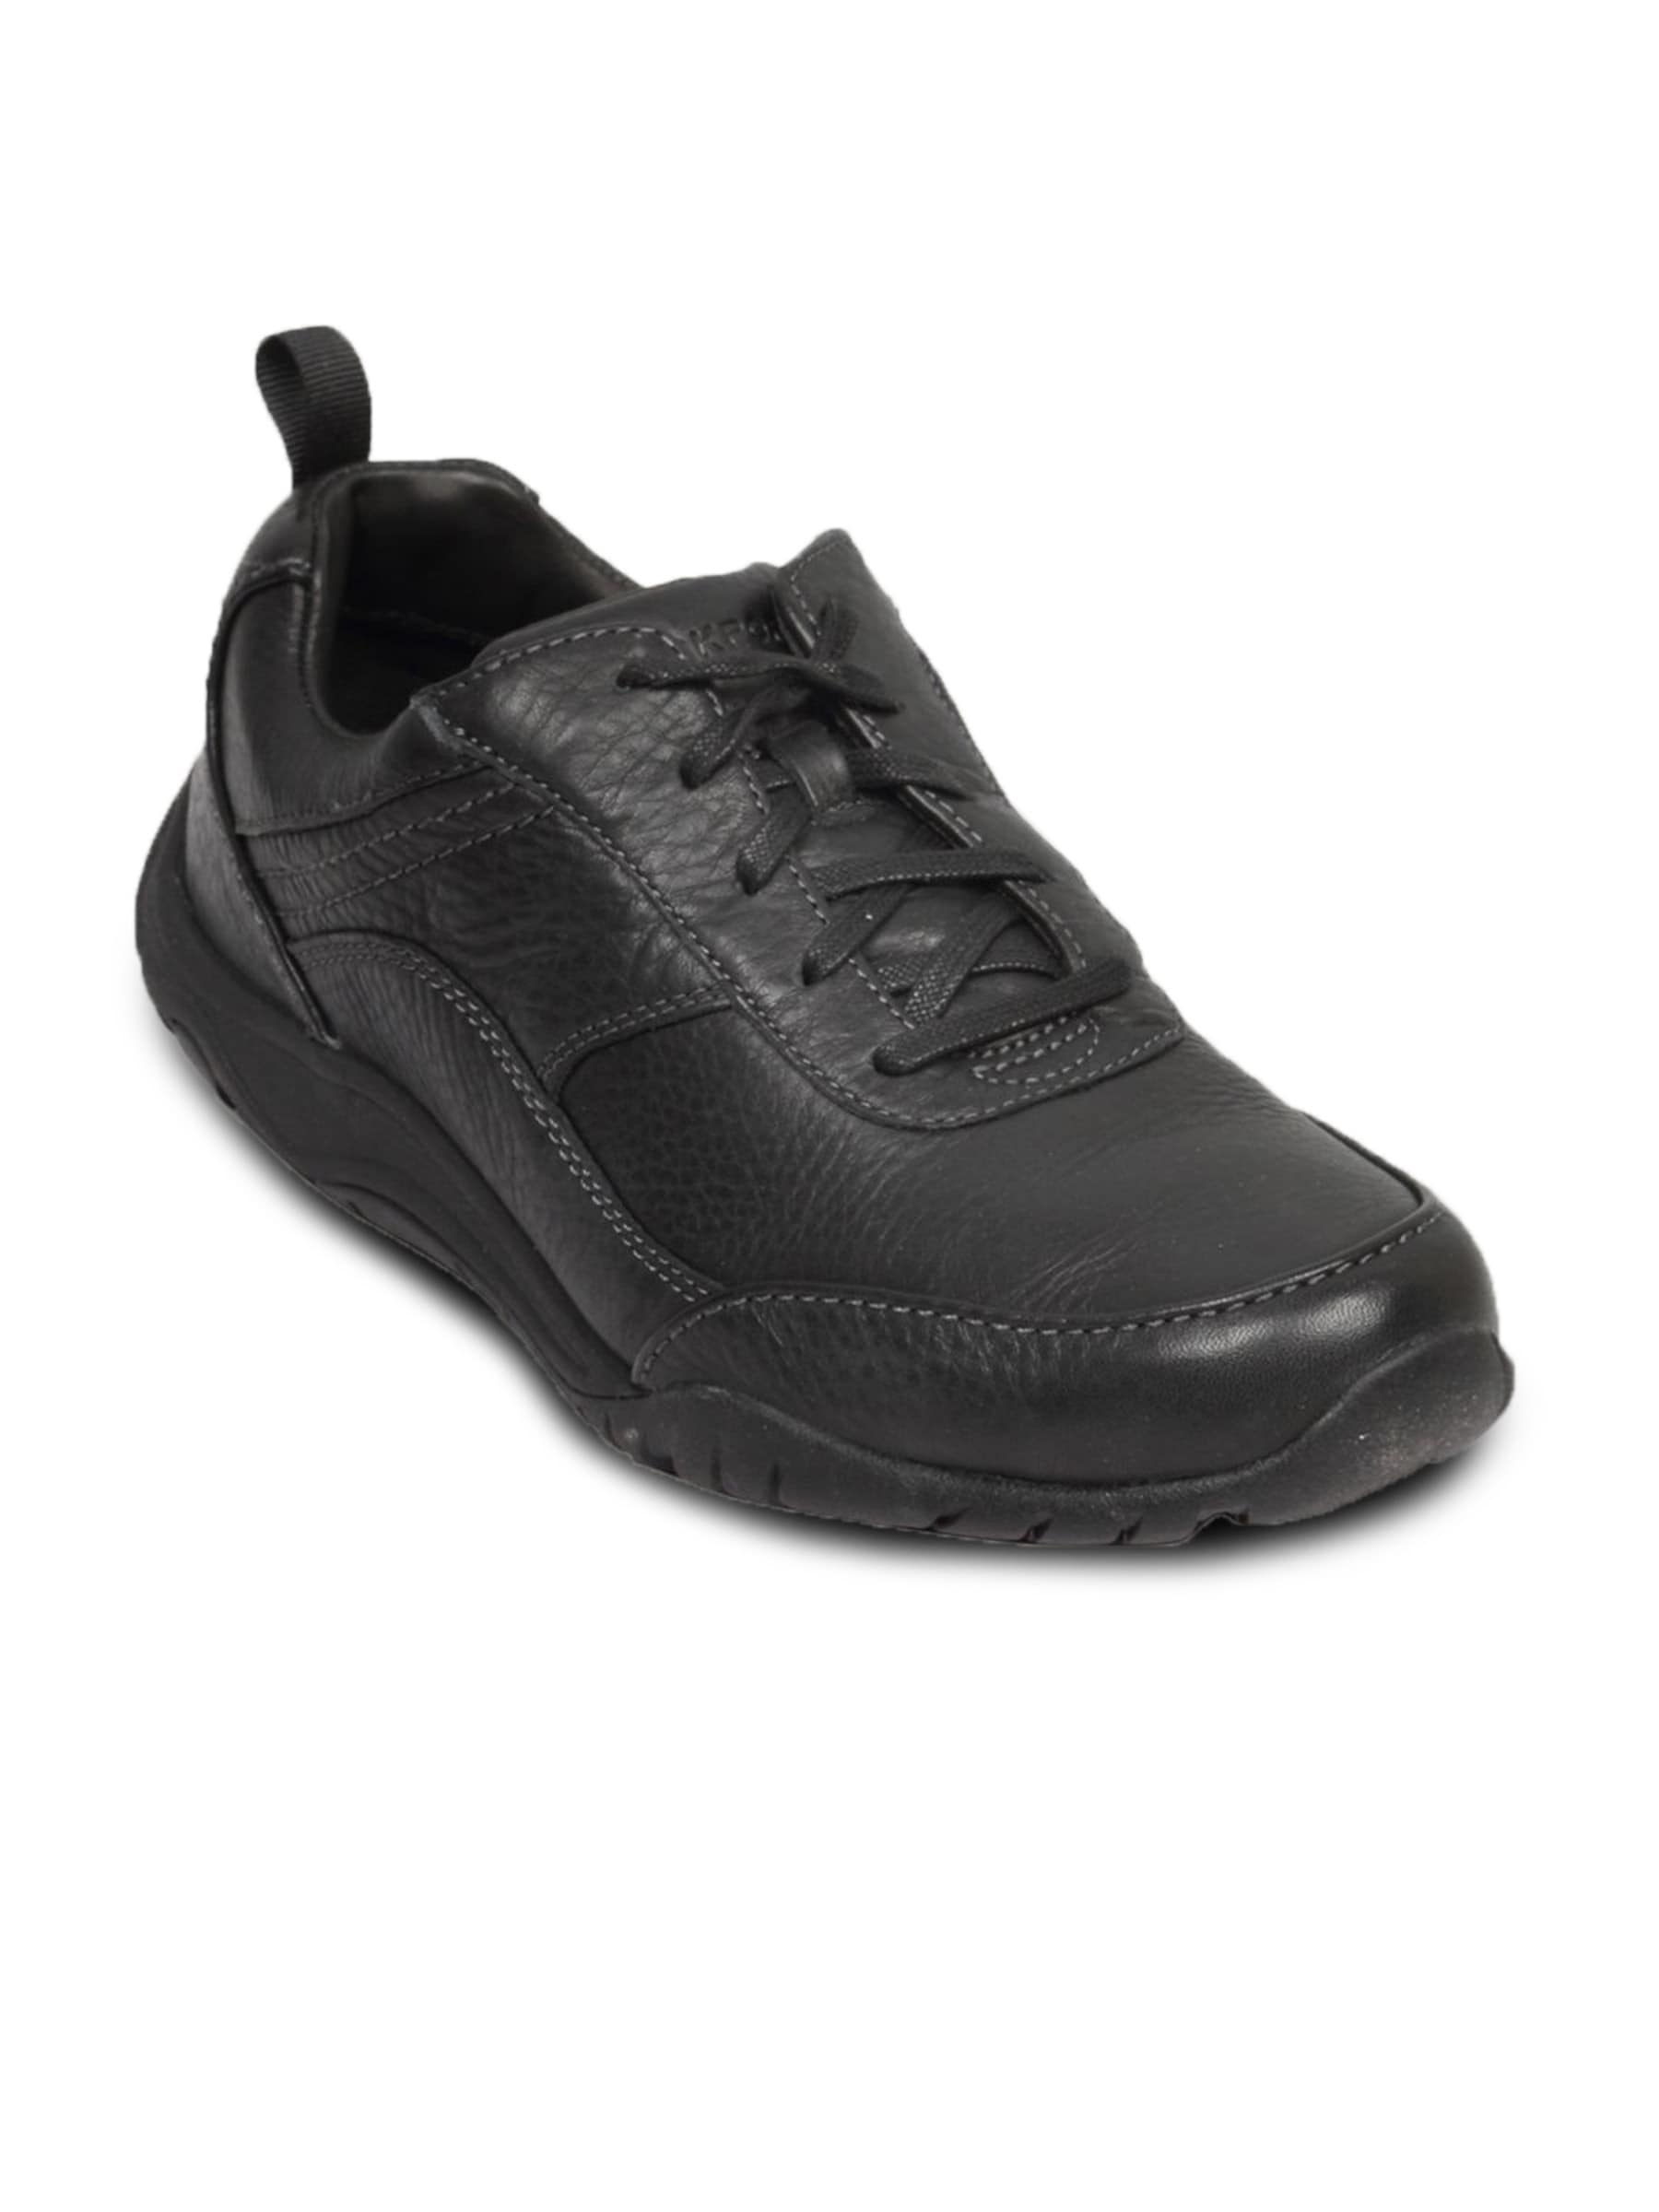 Rockport Men's Gavia Black Shoe